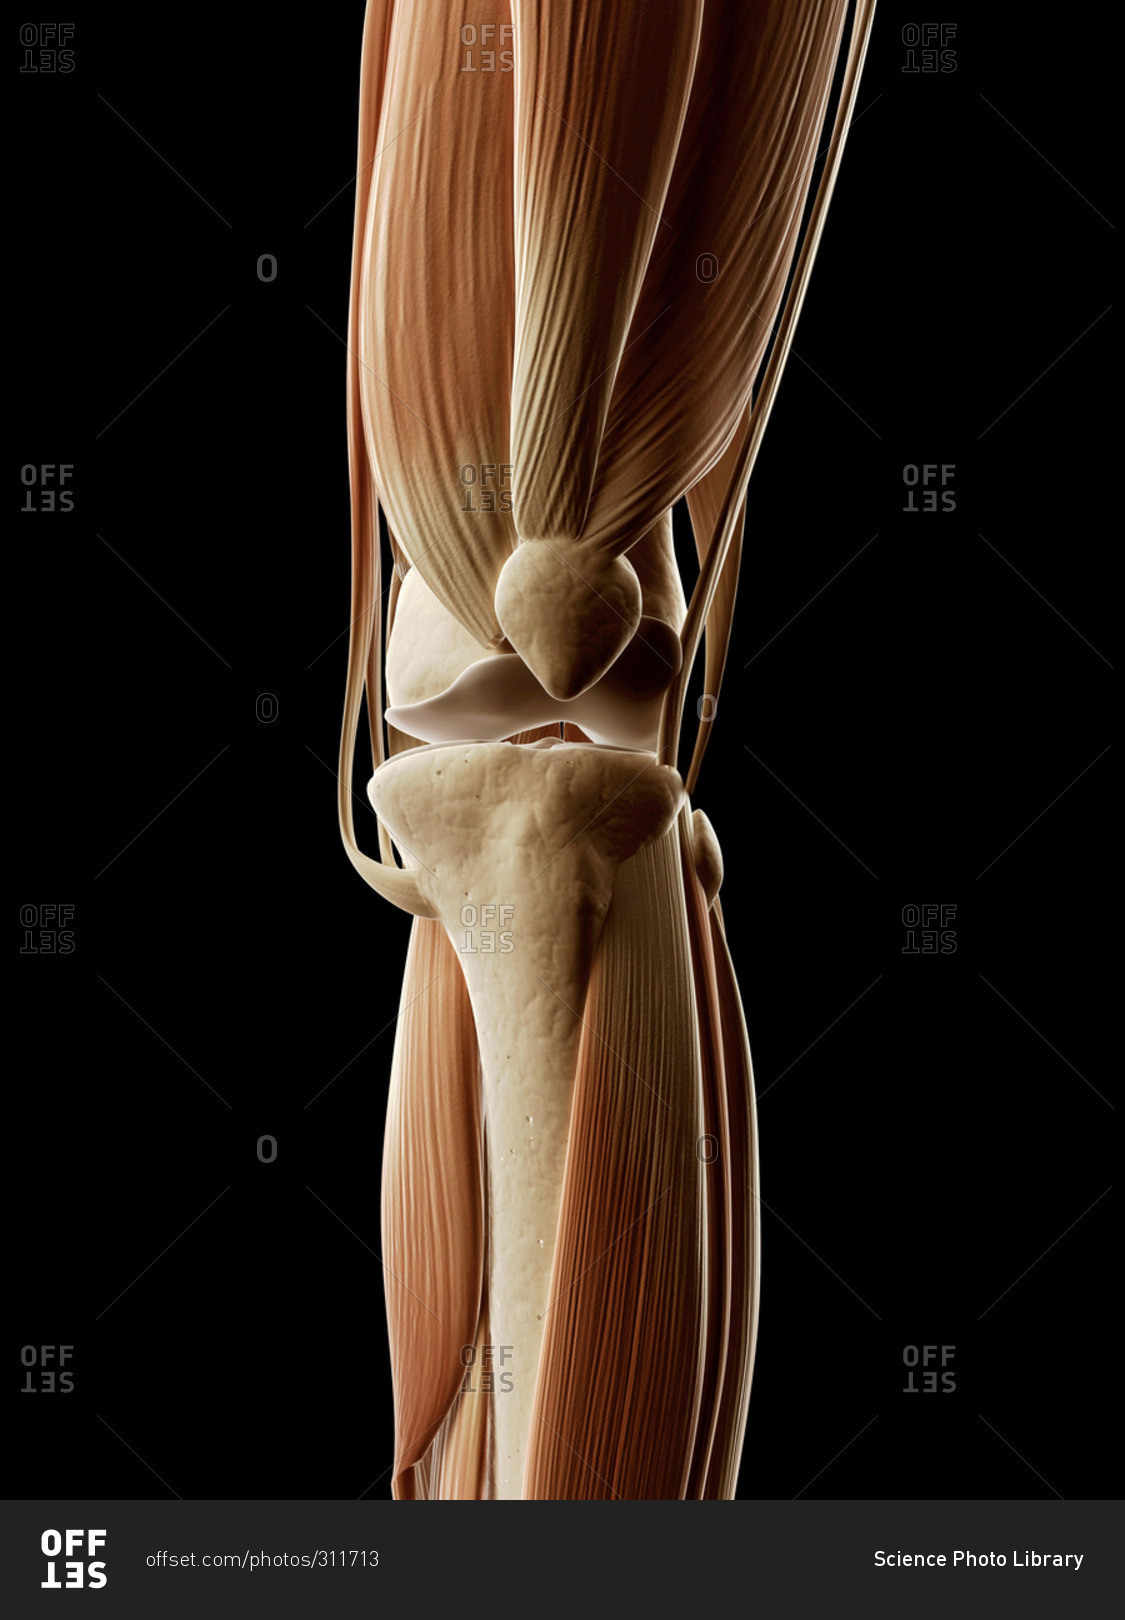 Digital illustration of human leg muscles stock photo - OFFSET